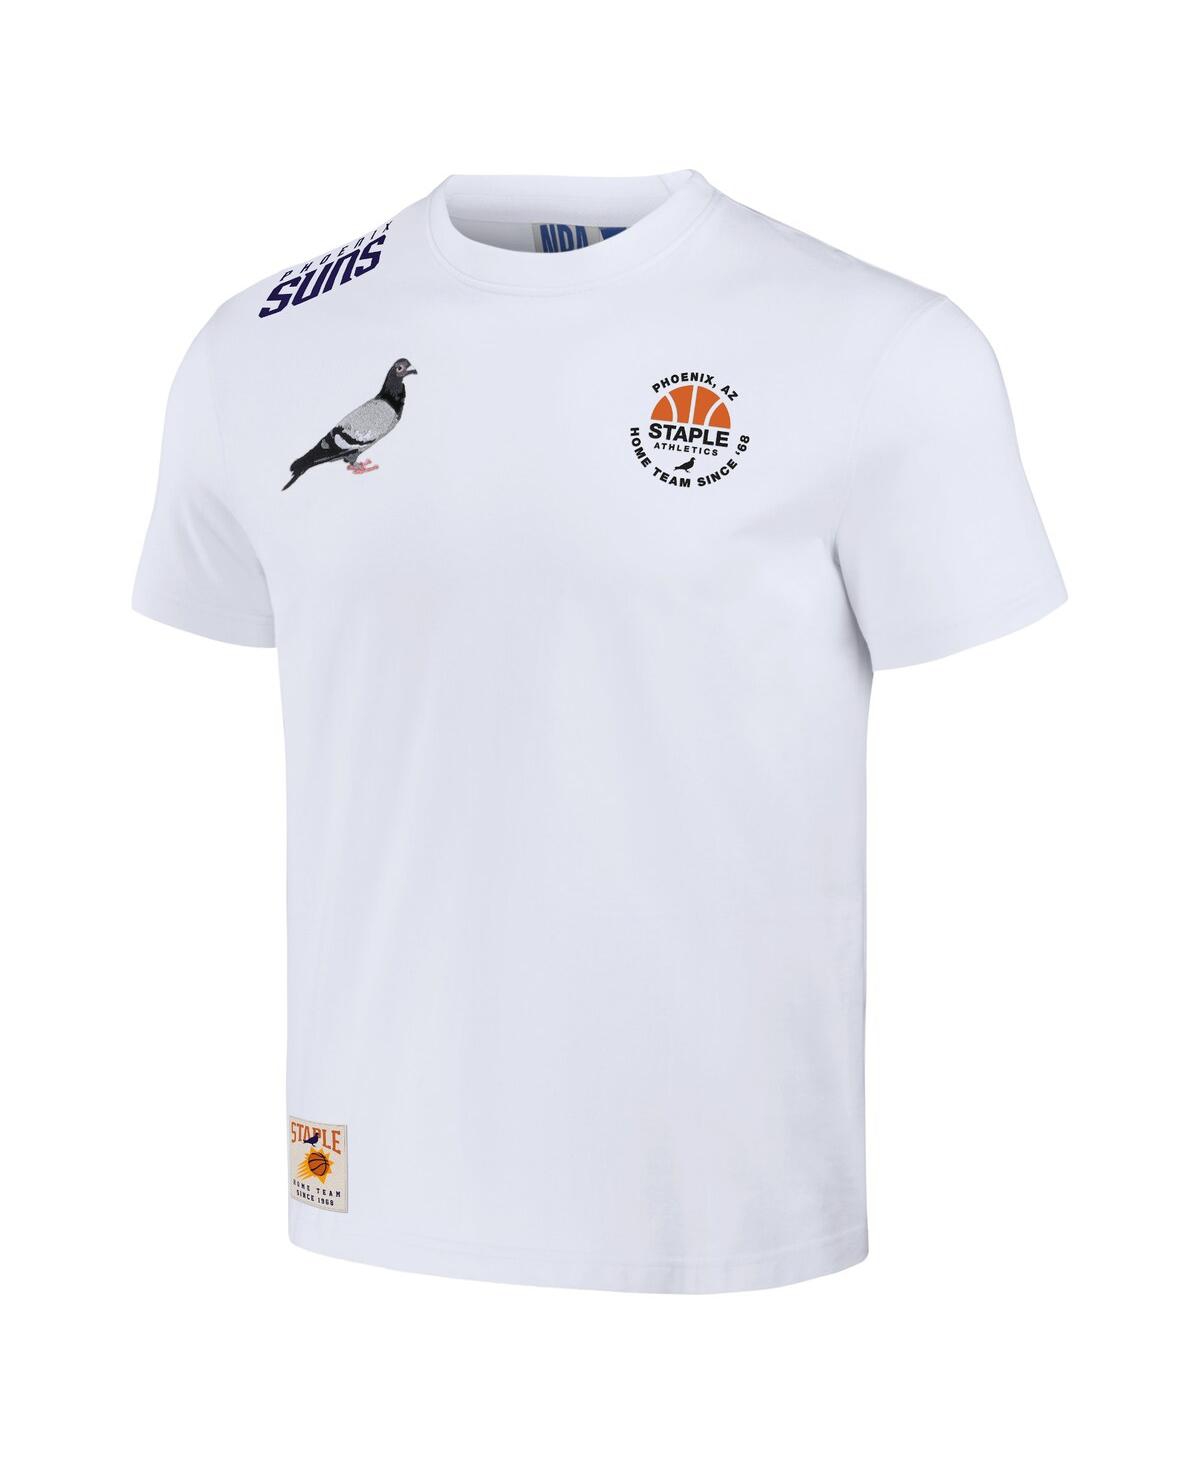 Shop Staple Men's Nba X  White Distressed Phoenix Suns Home Team T-shirt